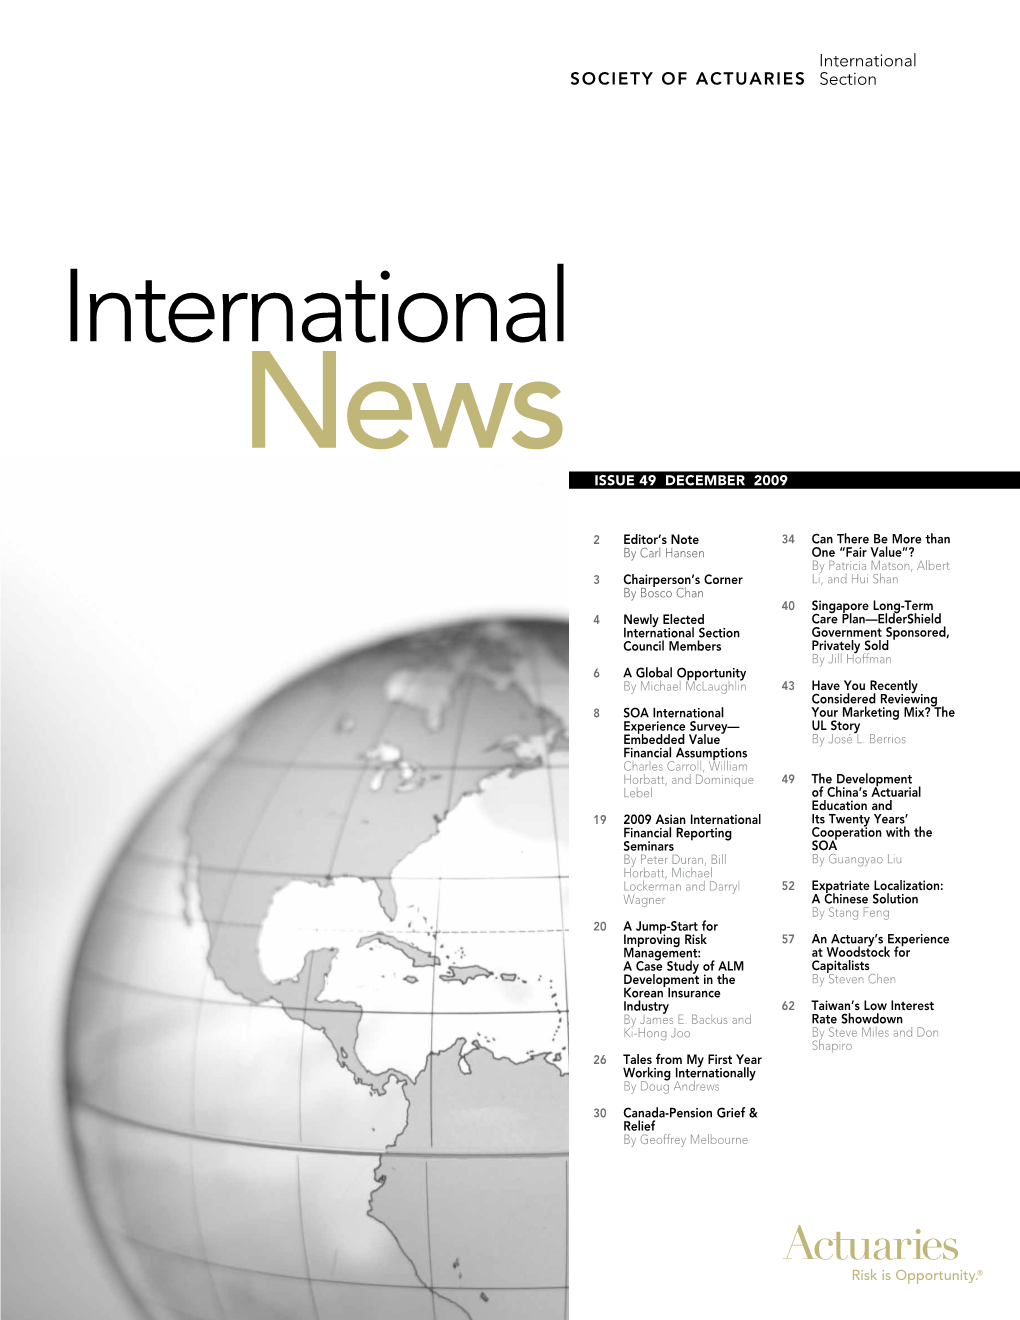 International News, Issue 49, December 2009